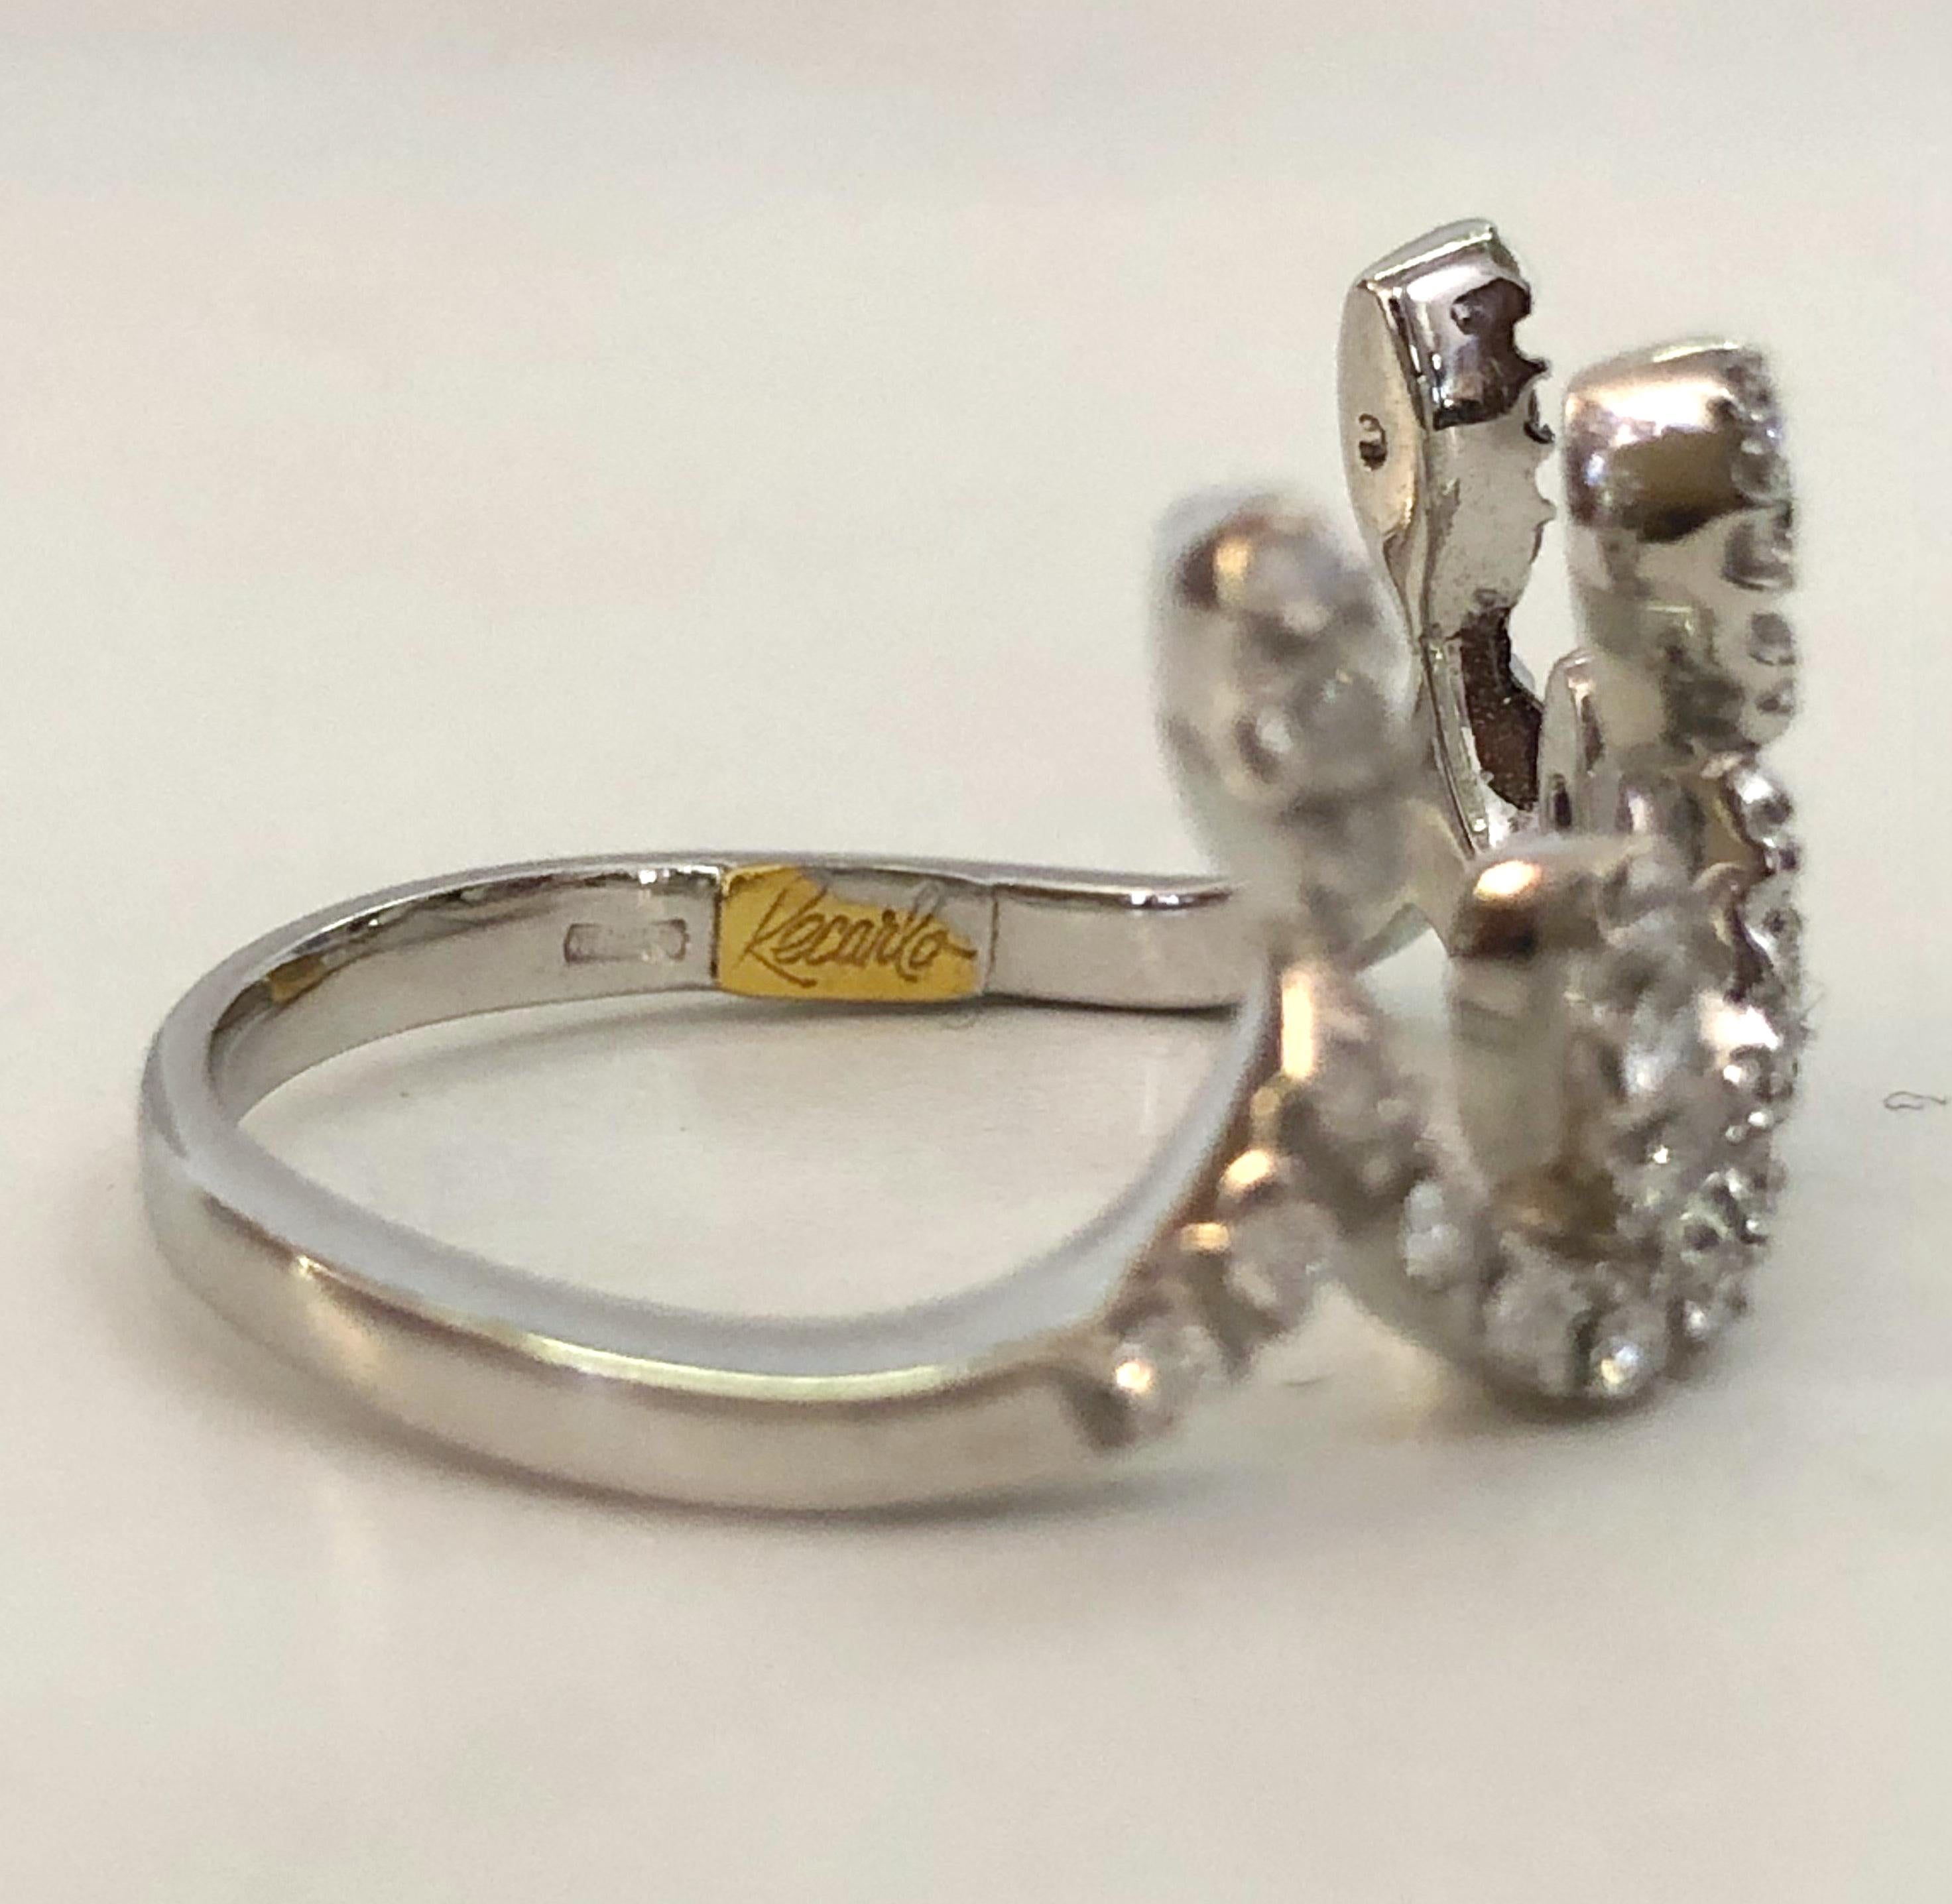 Brilliant Cut 18 Karat White Gold Diamond Ring For Sale